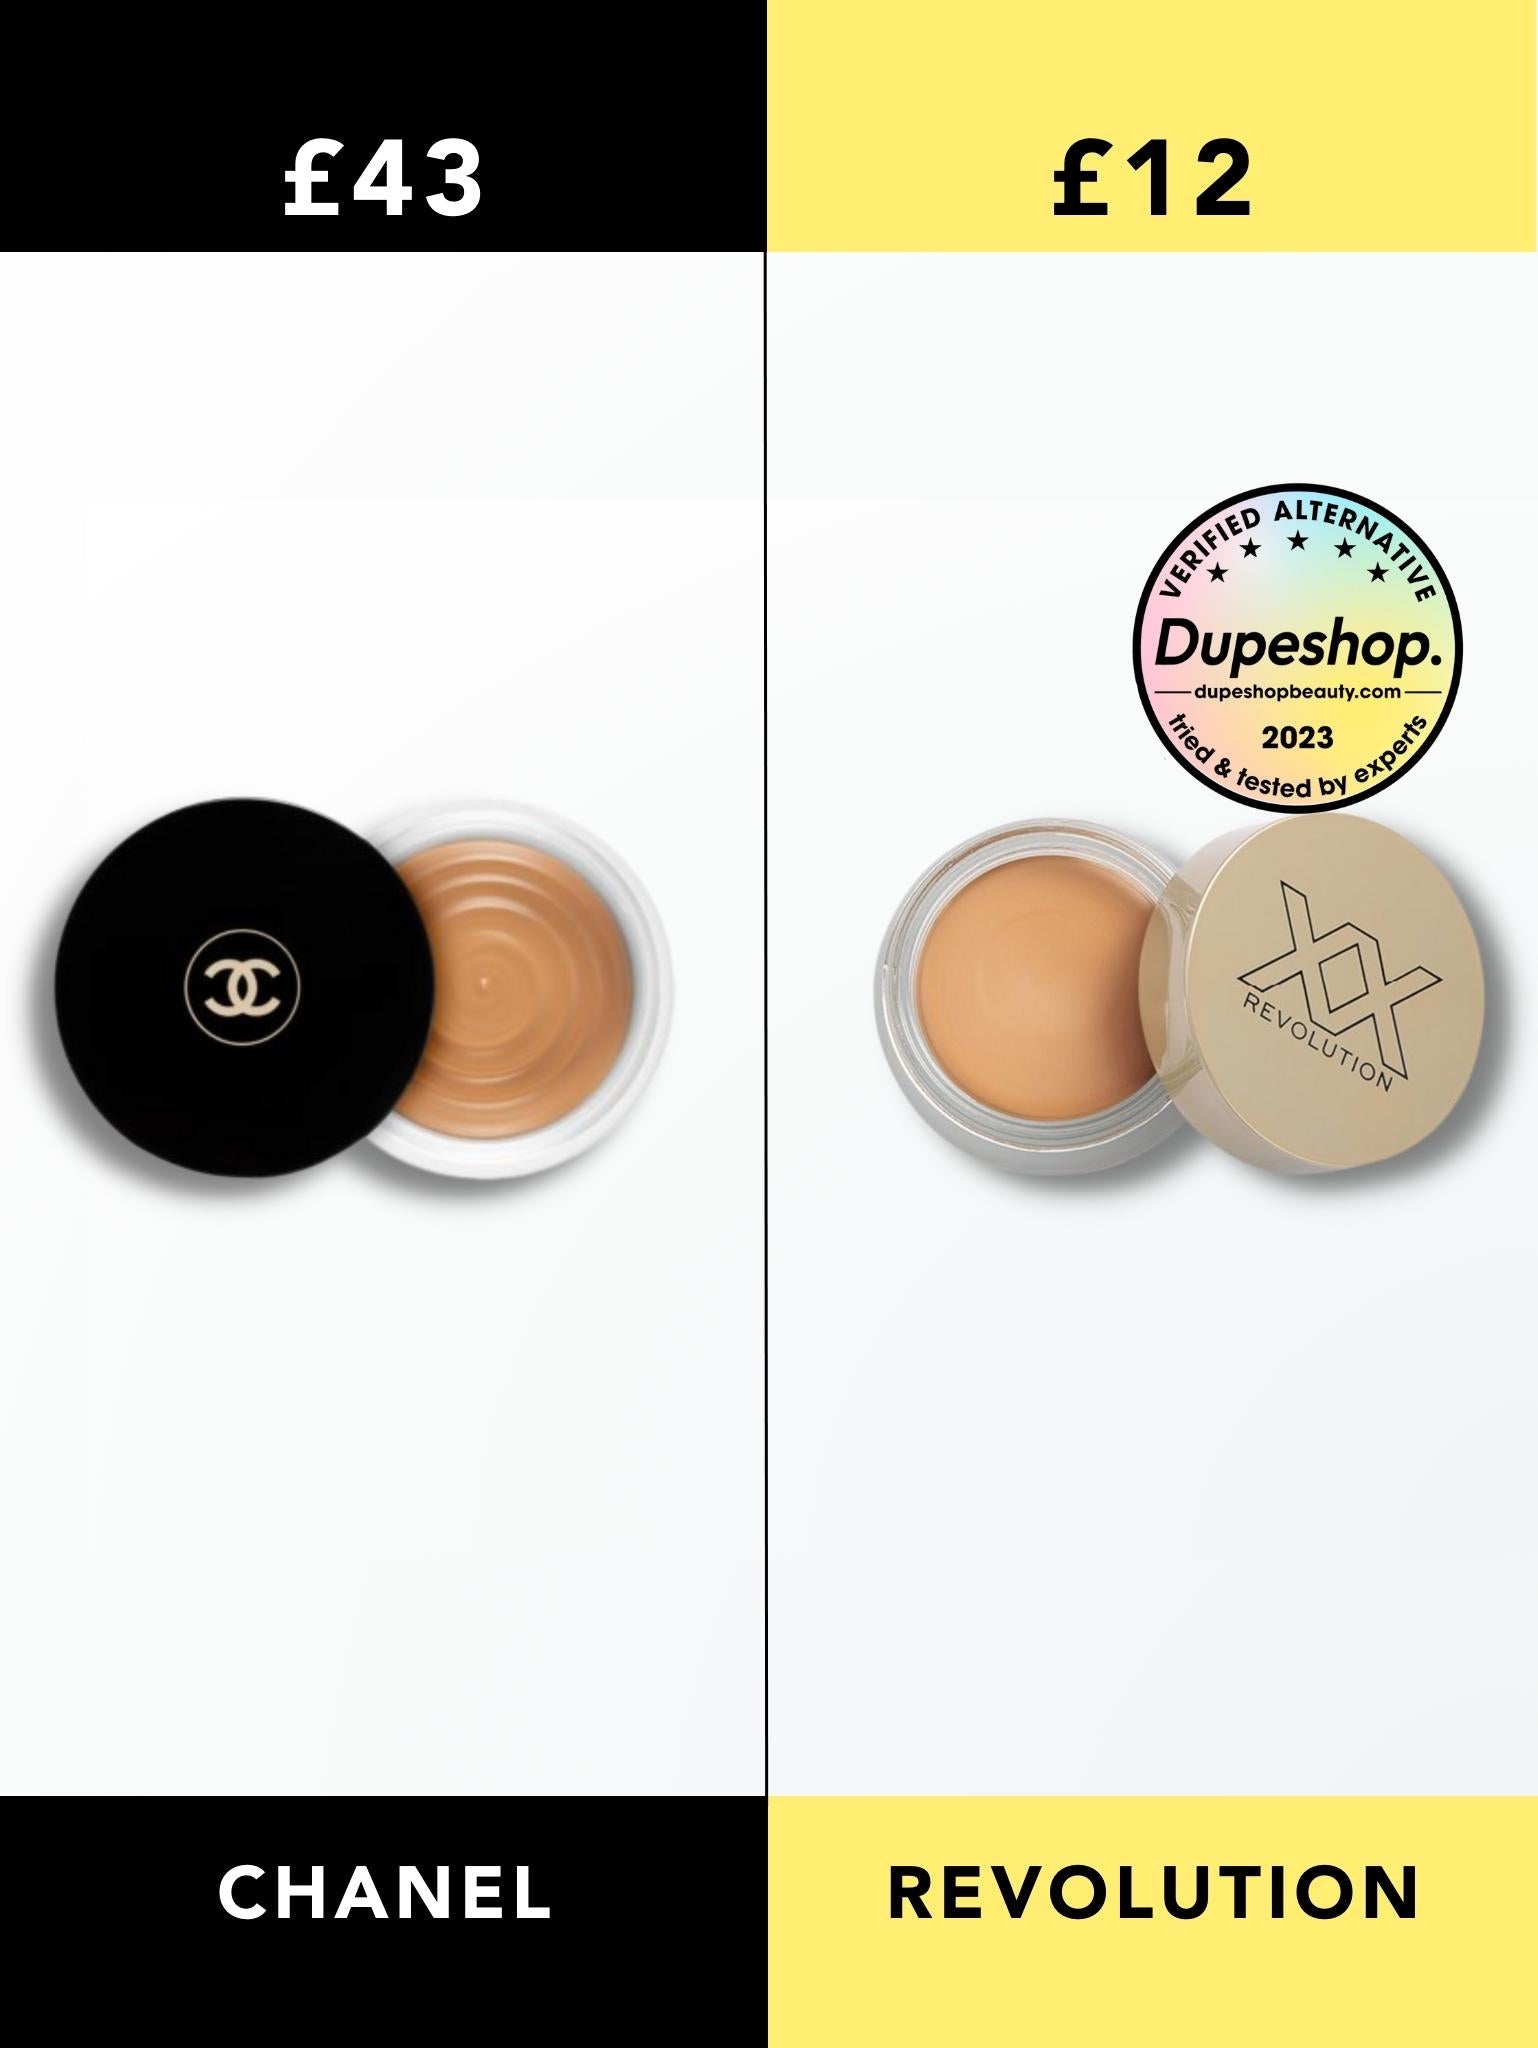 Chanel Bronzer Cream Les Beiges - Milabu Beauty Review